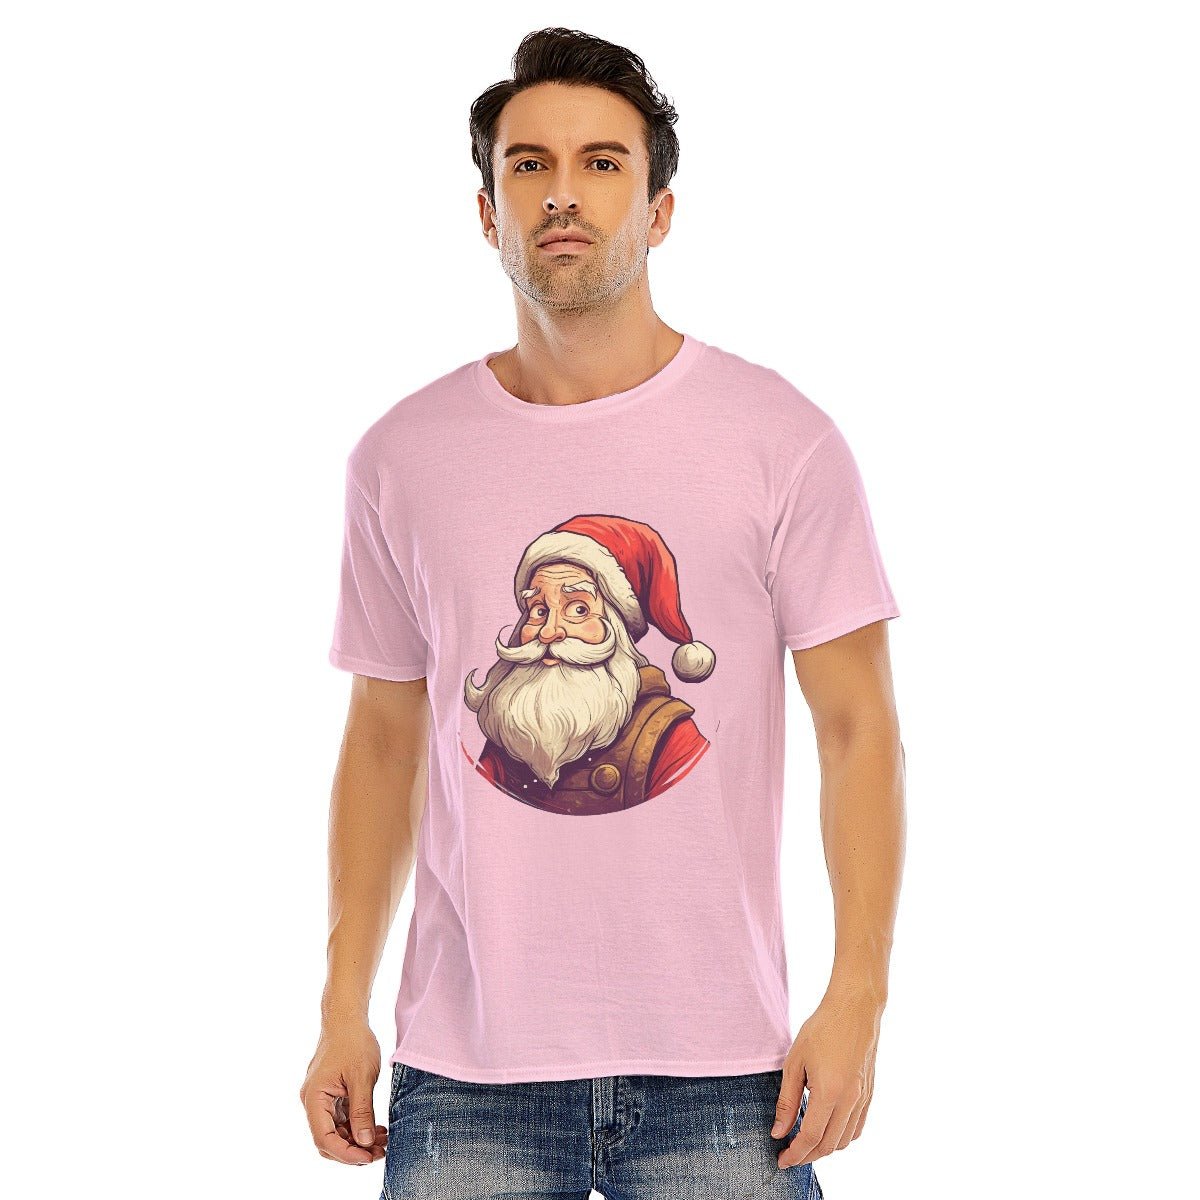 Mens Short Sleeve Christmas Tee - Santa Philosopher - Festive Style